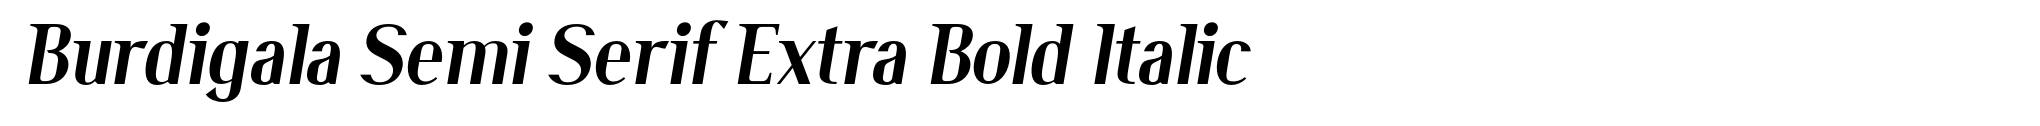 Burdigala Semi Serif Extra Bold Italic image